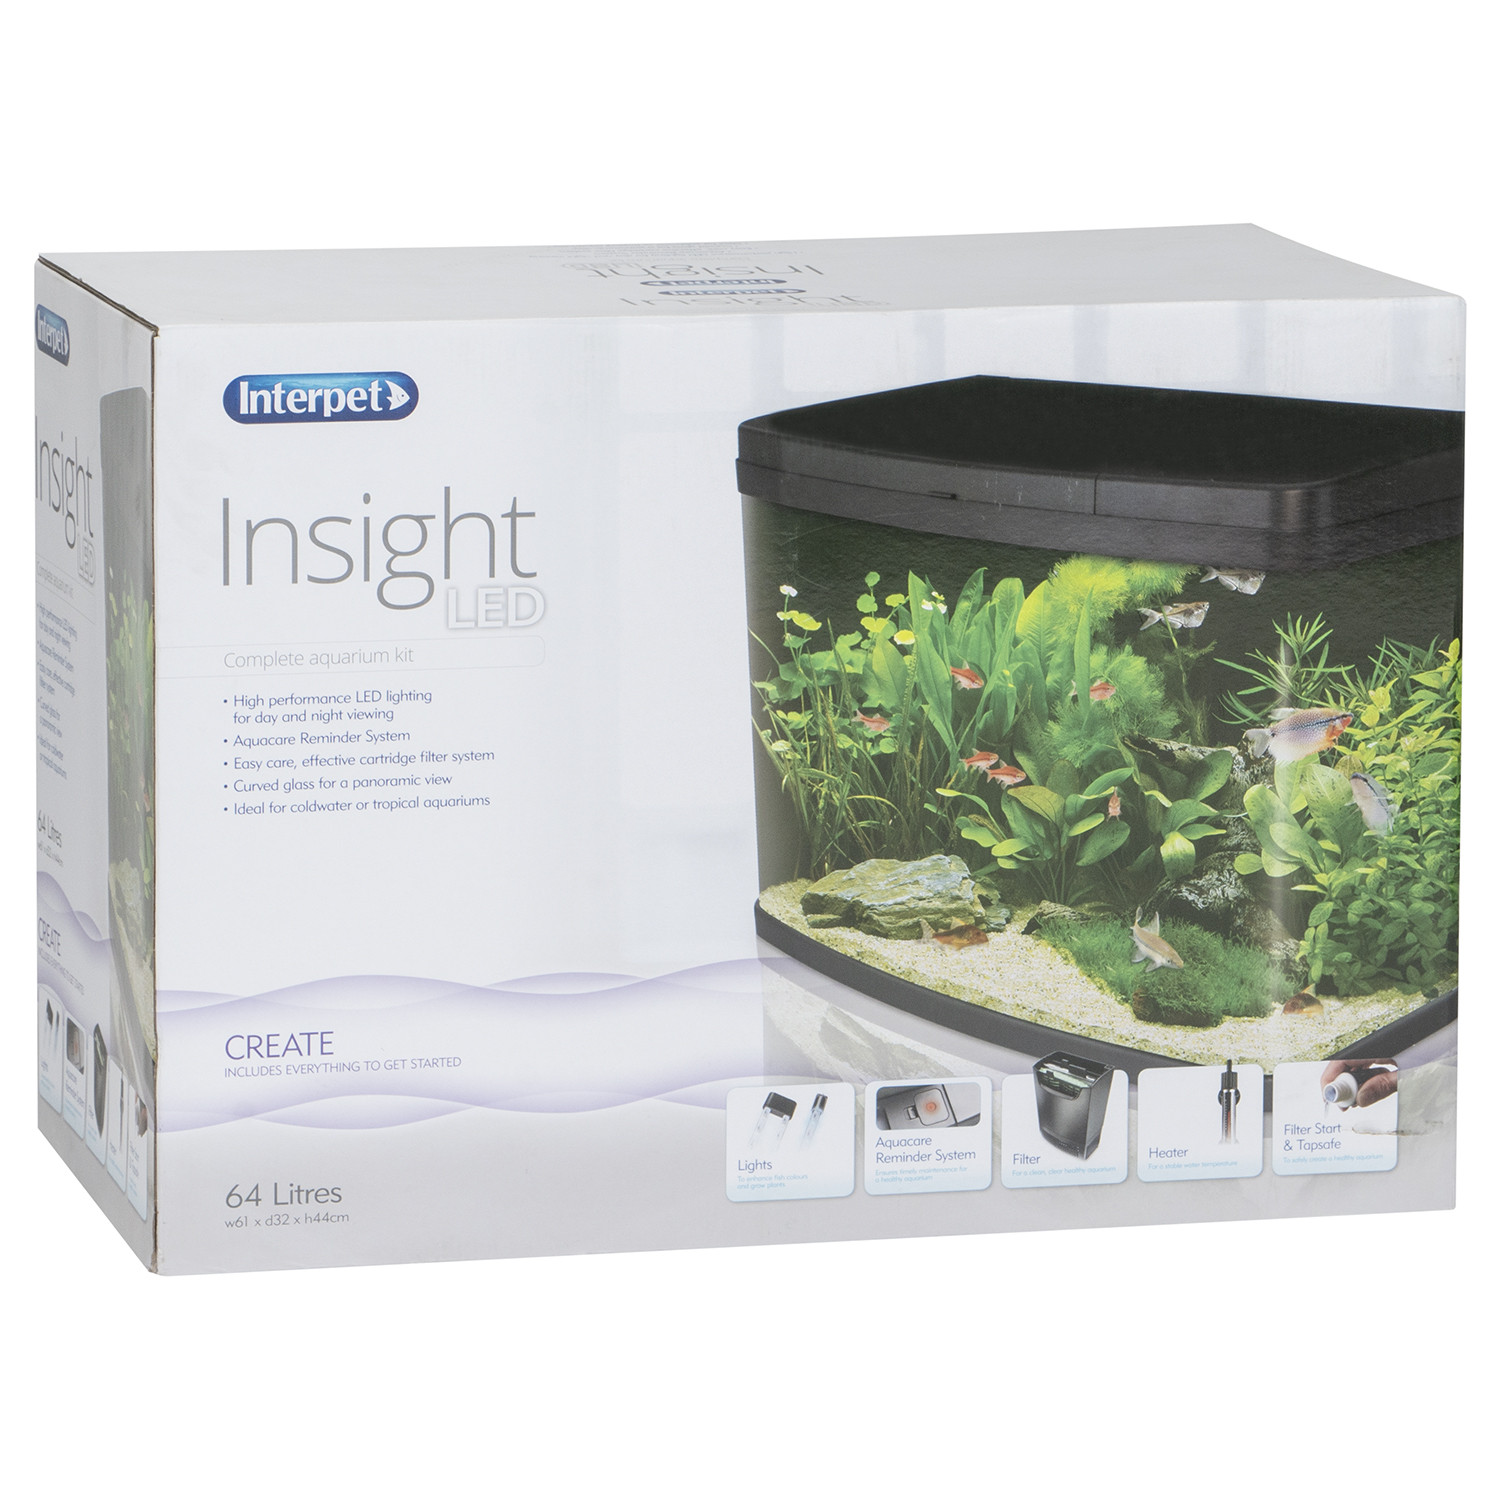 Interpet Insight LED Complete Aquarium Kit 64L Image 2